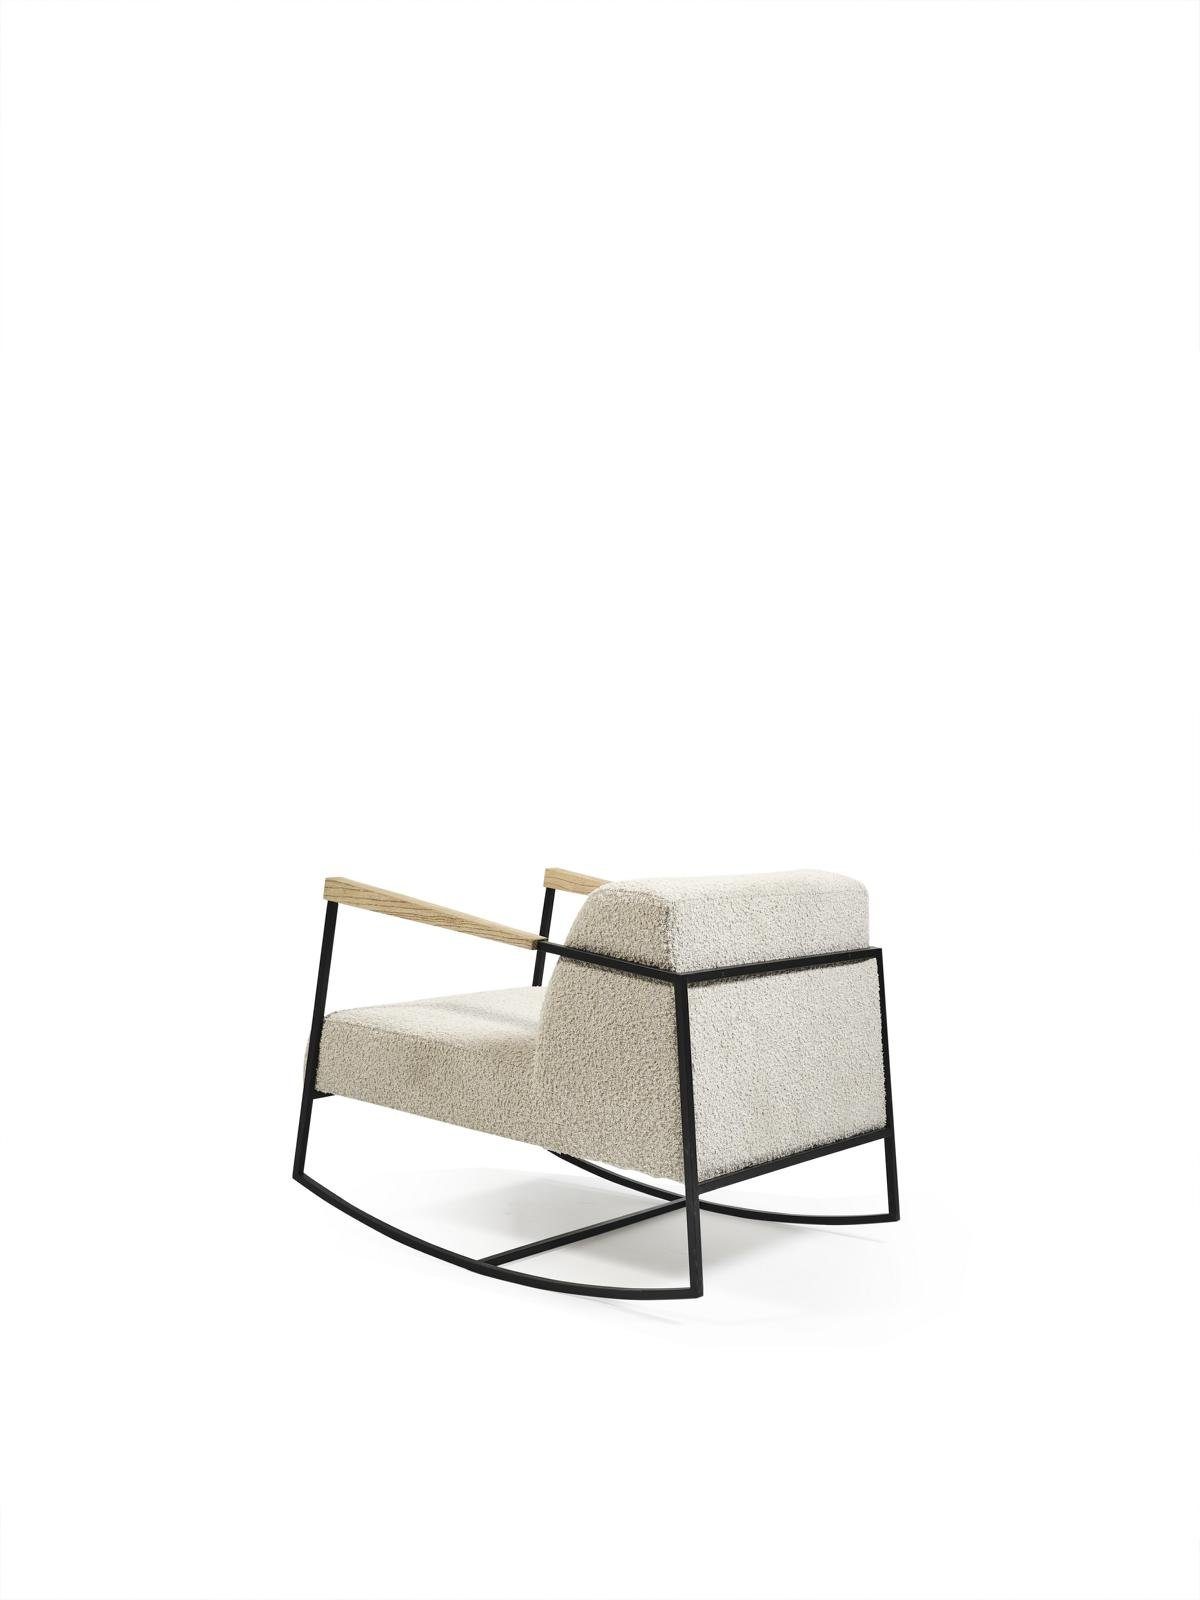 Textil Made Design 1 Sessel JVmoebel Neu Europe Sitzer Sitzer (Sessel), Luxus Sessel Polster in